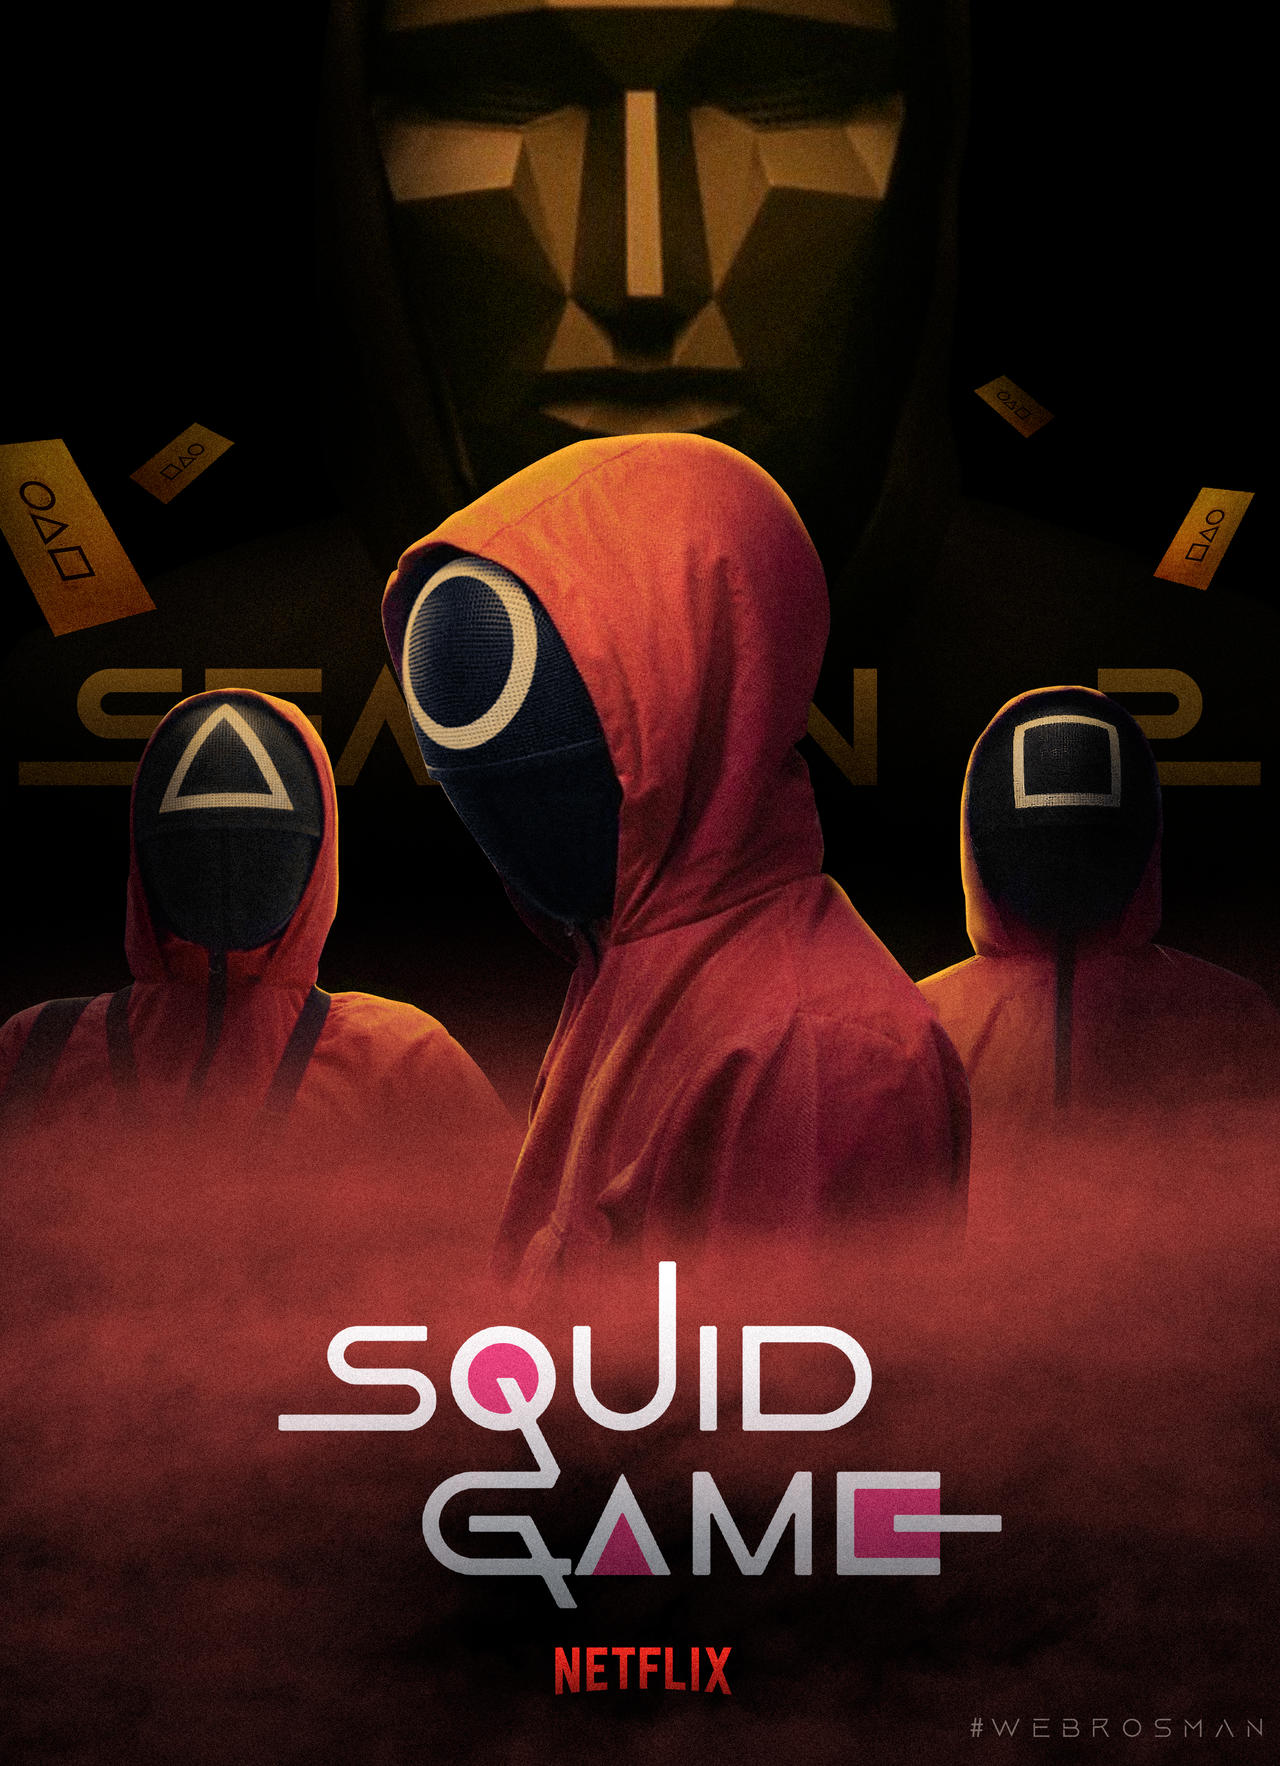 Squid Game Season 2 Concept poster by Webrosman on DeviantArt